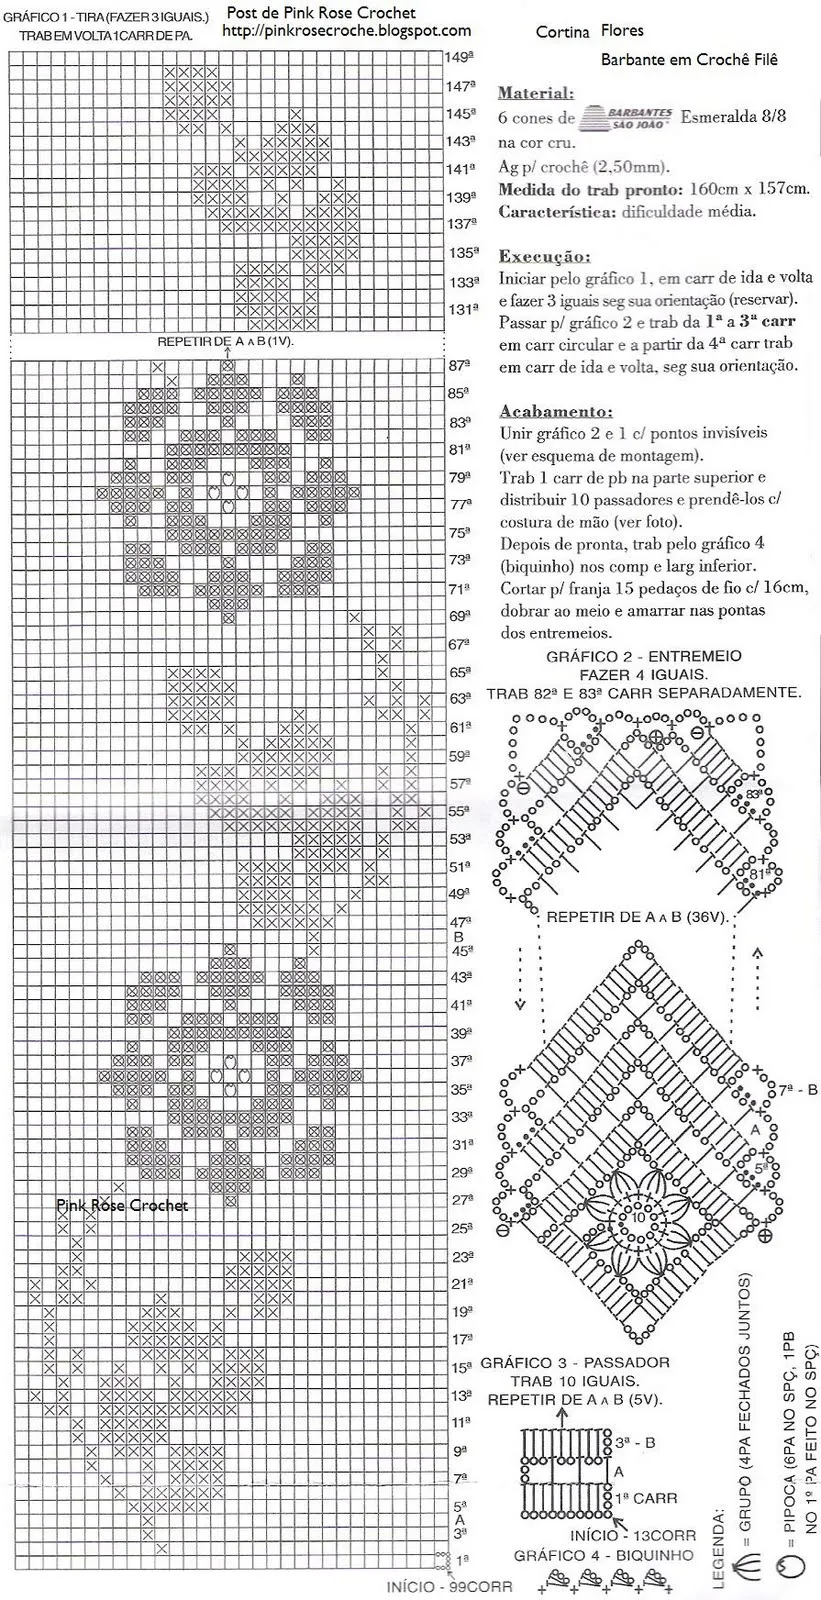 Cortinas crochet patrones gratis - Imagui